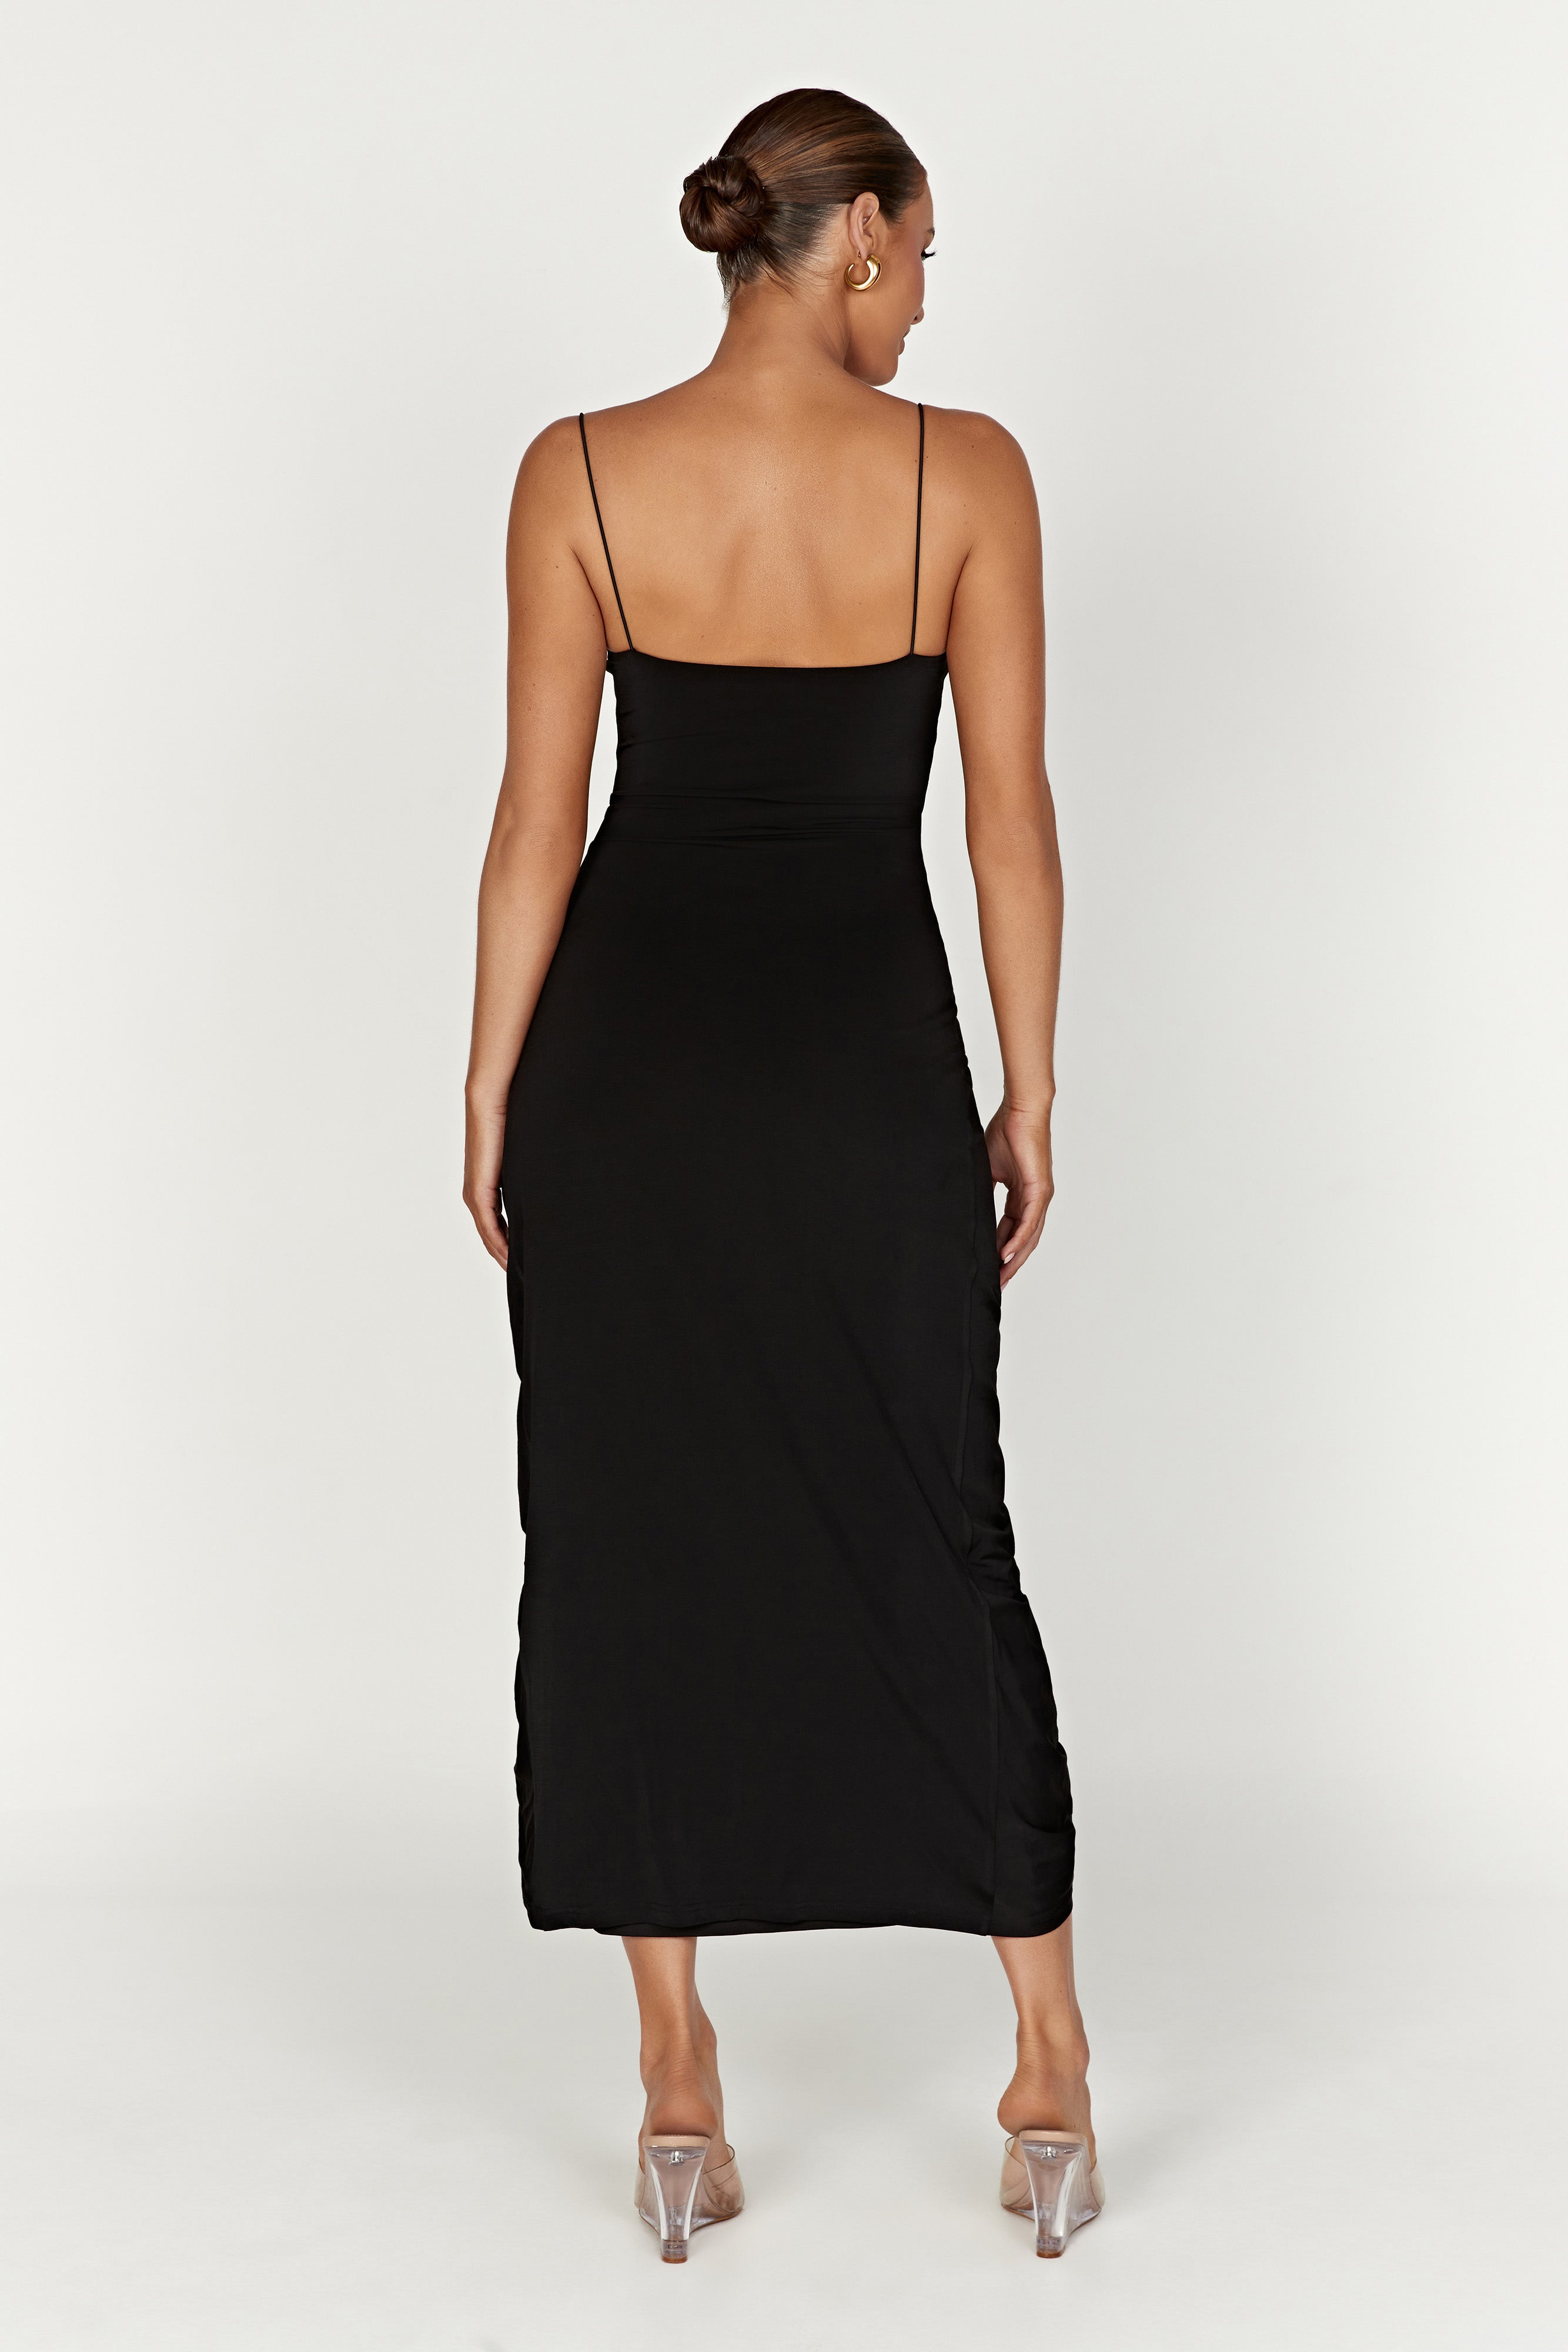 Nevaeh Rose Midi Dress – Black